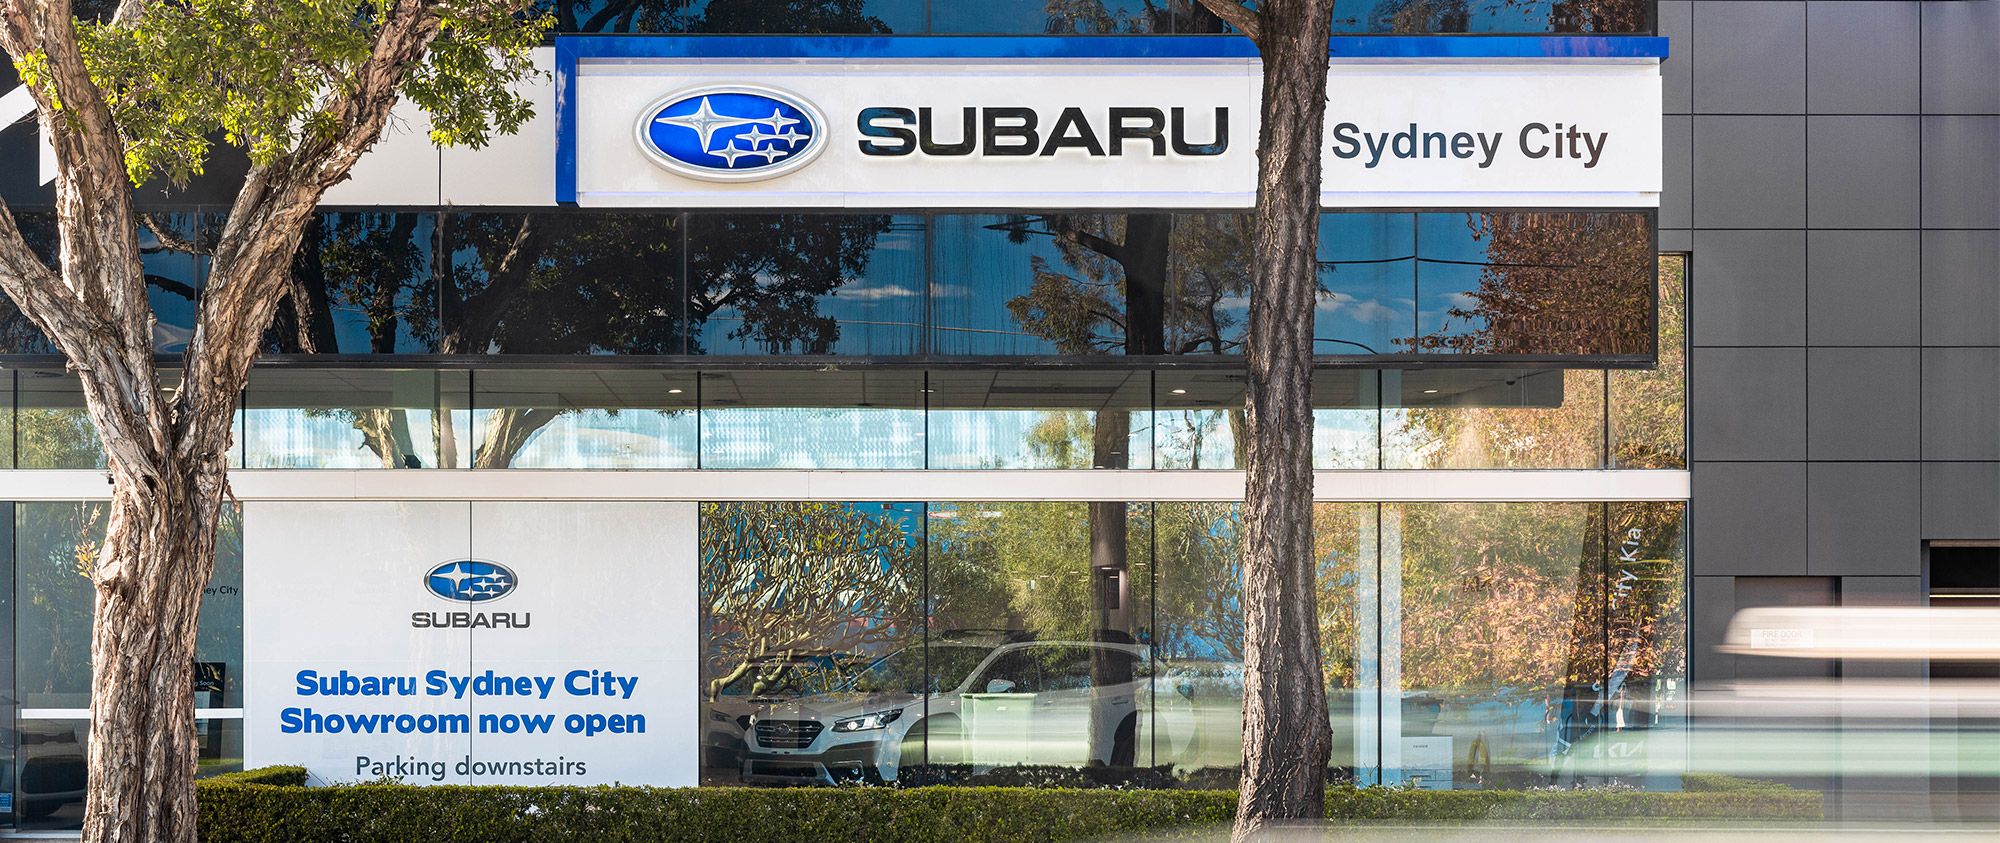 Subaru Sydney City Now Open